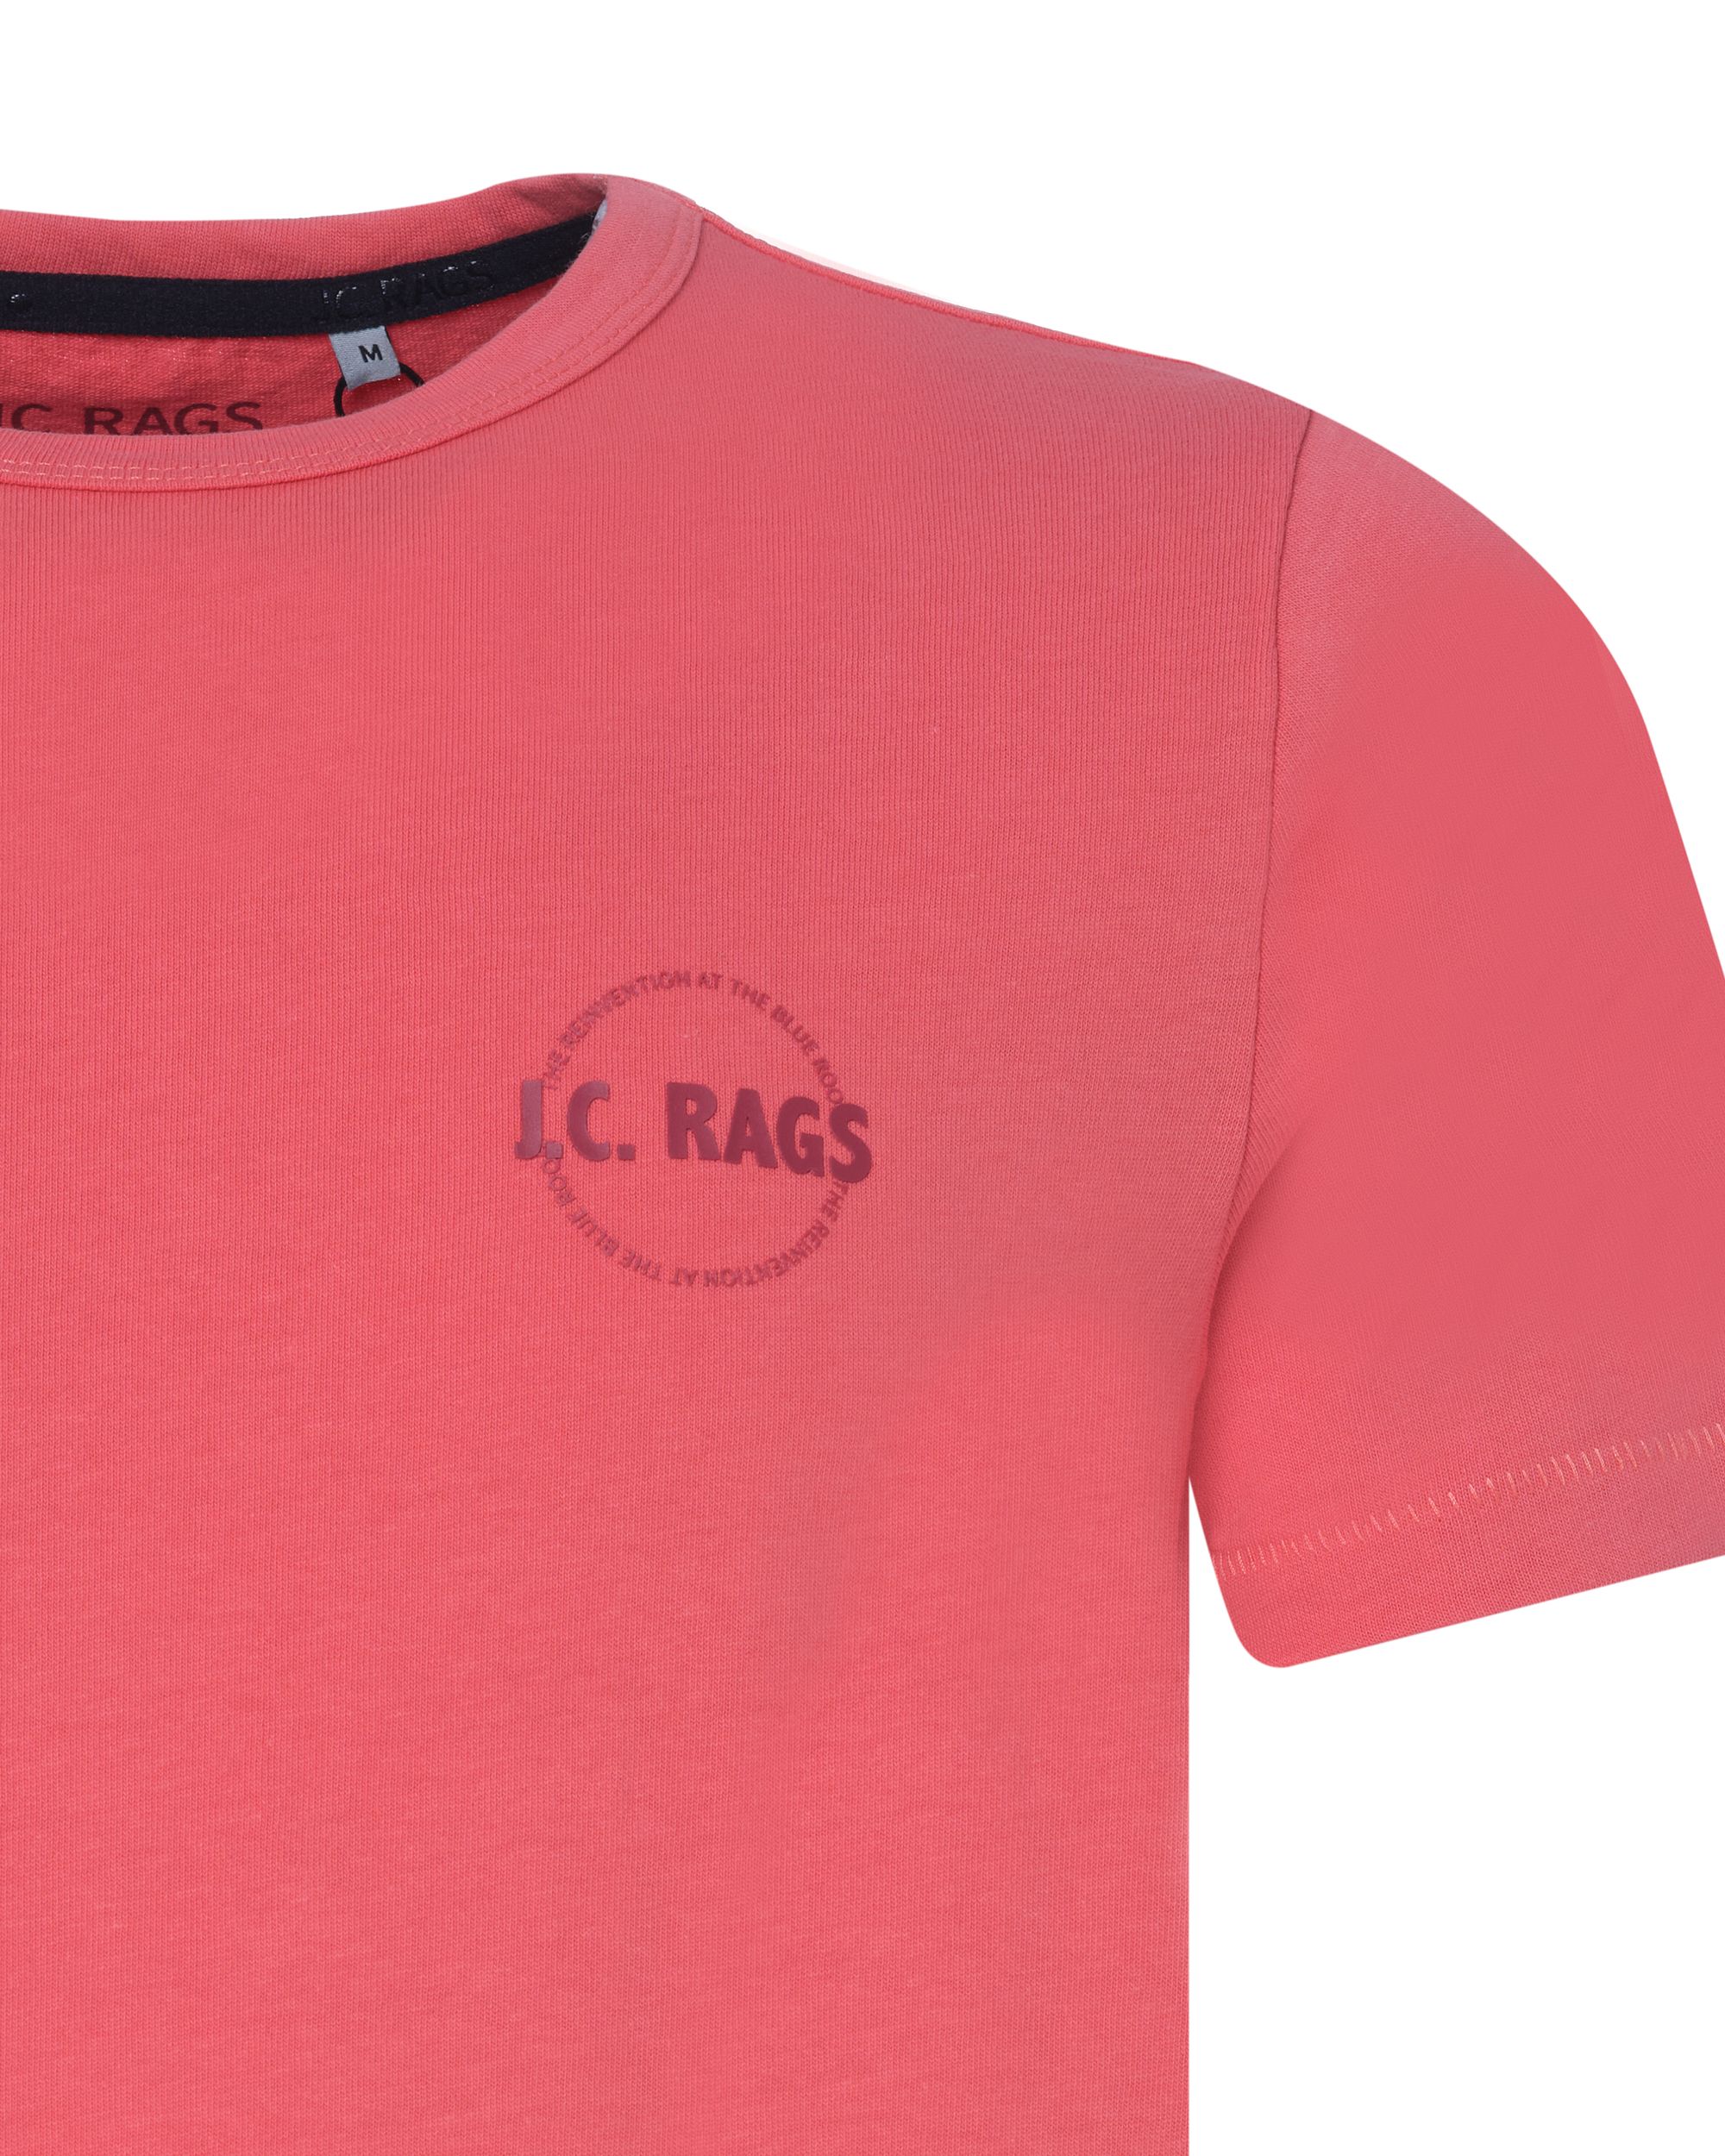 J.C. RAGS  Johan T-shirt KM Terra uni 073071-006-L